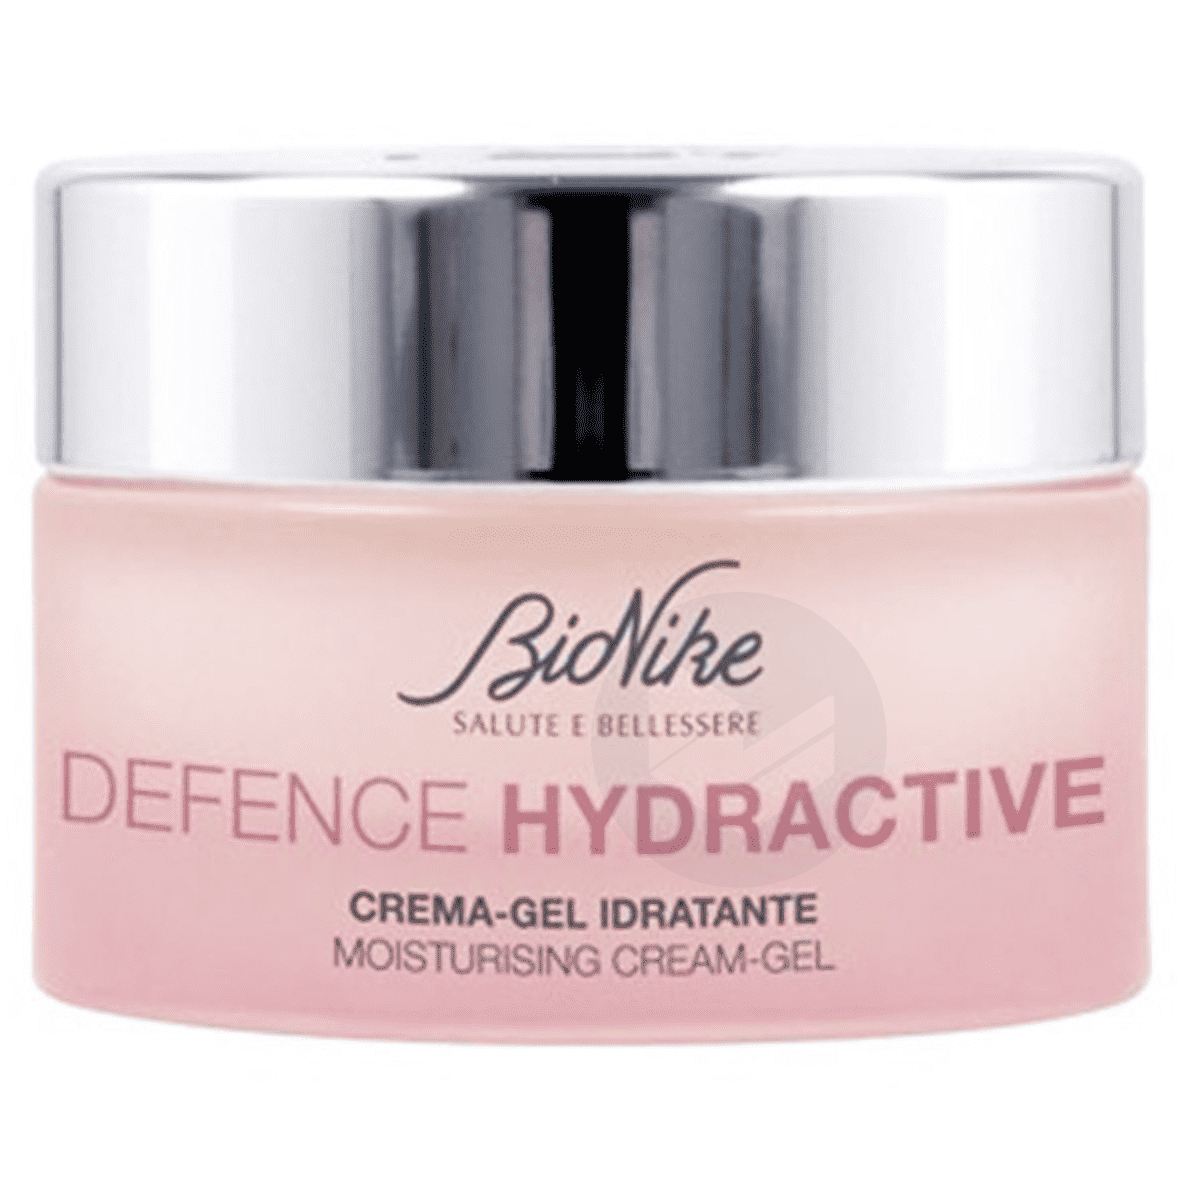 Defence Hydractive Crème 50ml